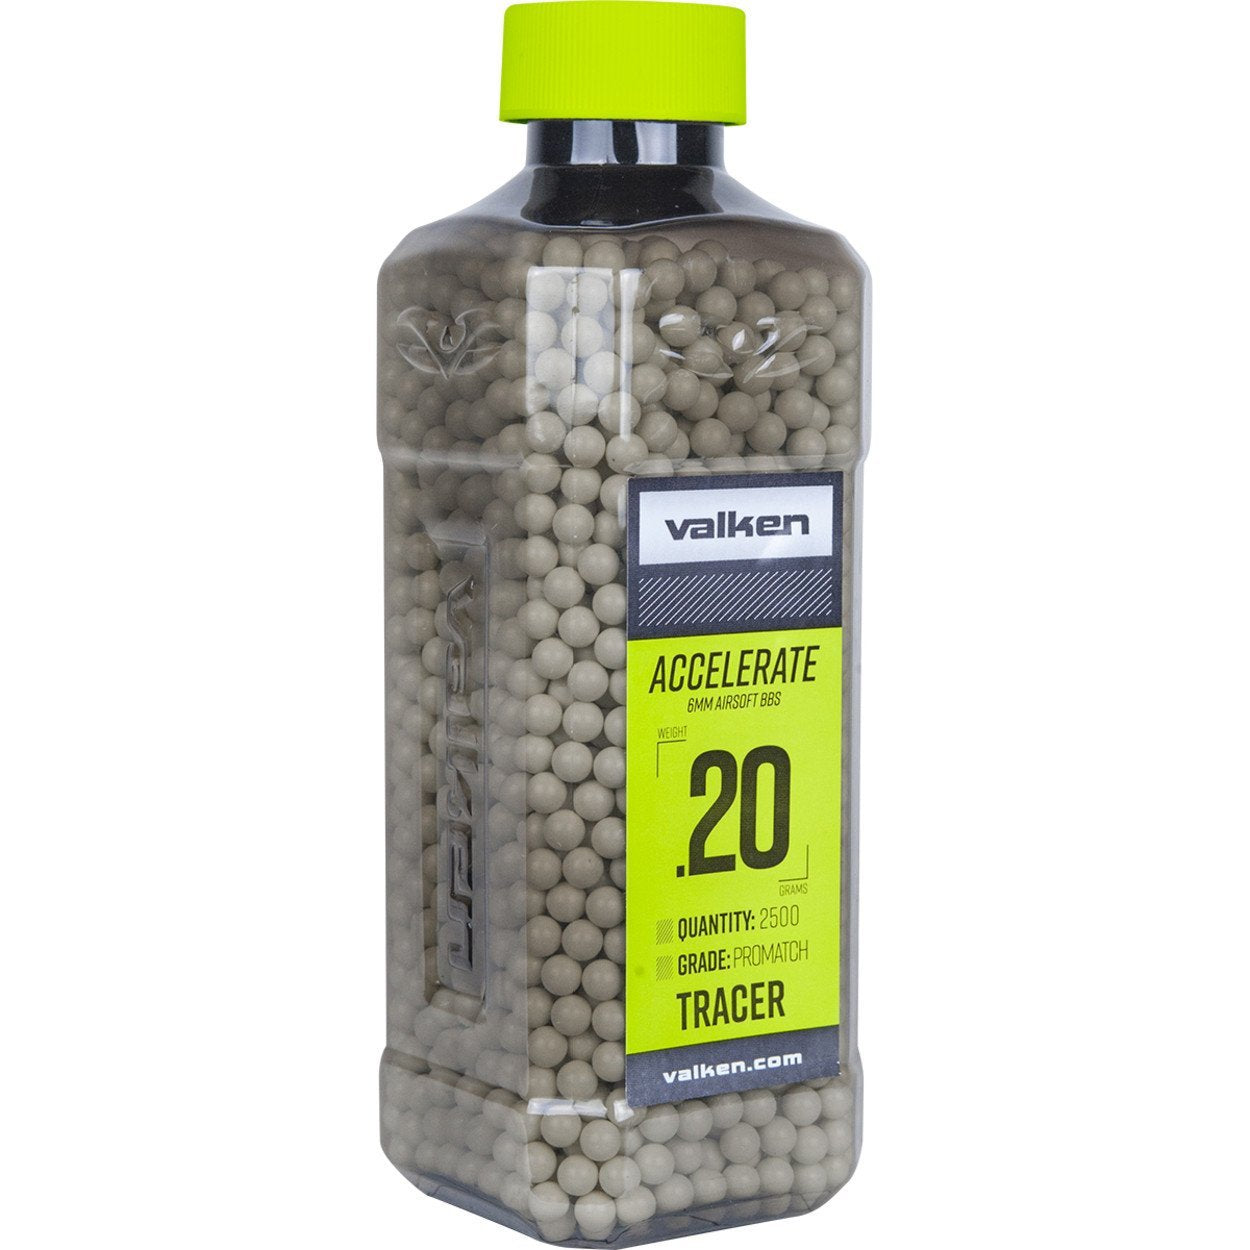 Valken ACCELERATE 0.20g BBs 2500 ct Bottle - Tracer - Valken Paintball